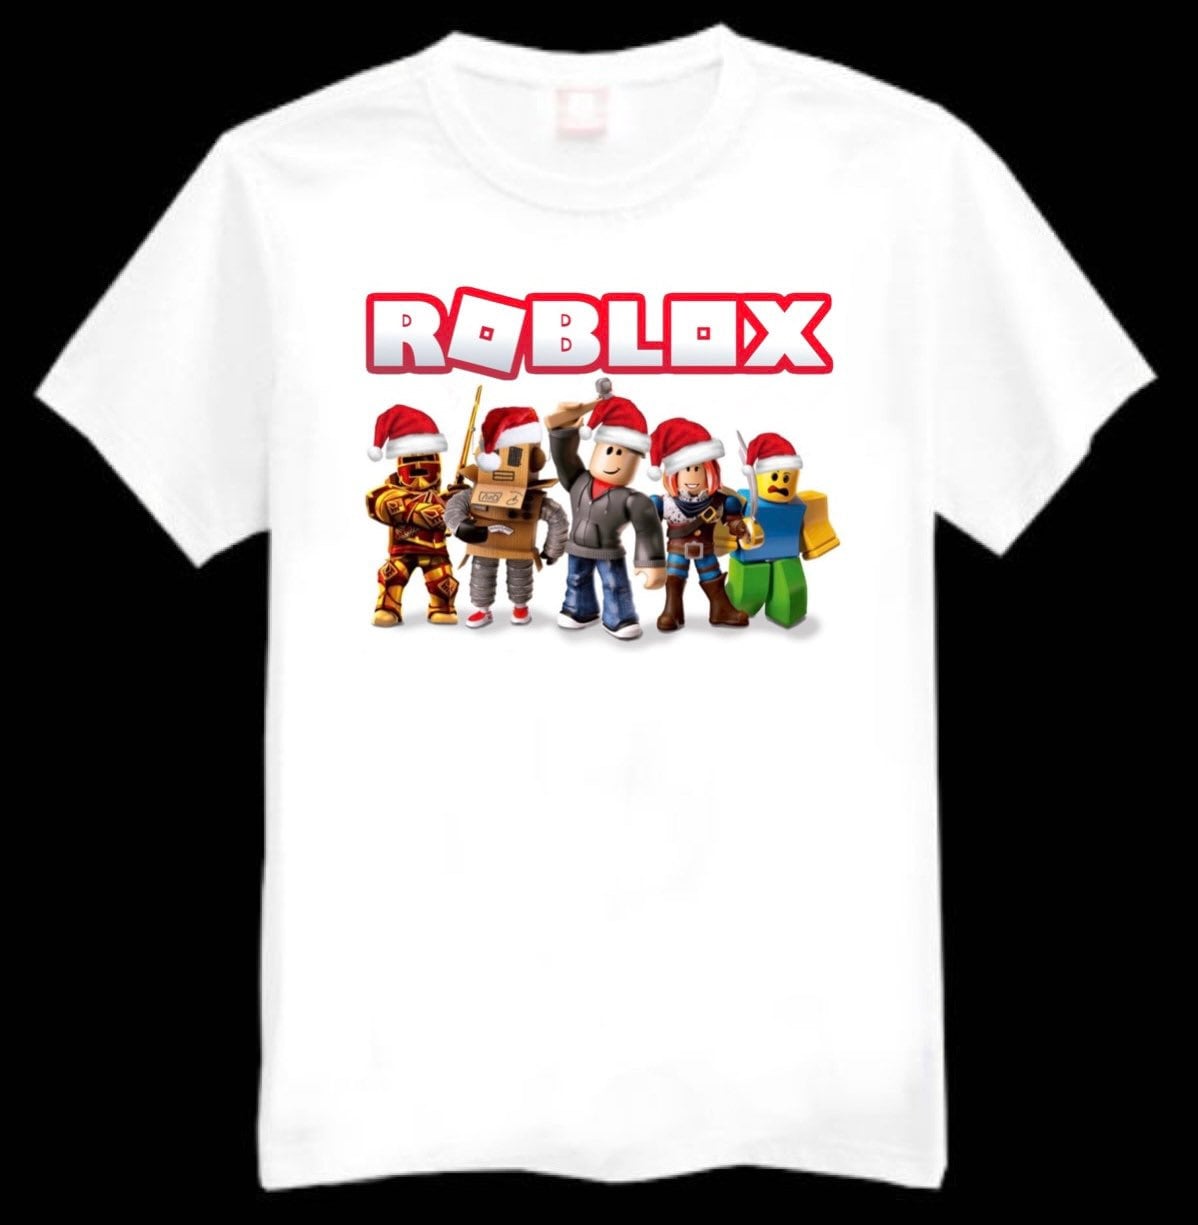 Camiseta De Roblox Feminina Infantil Personalizada